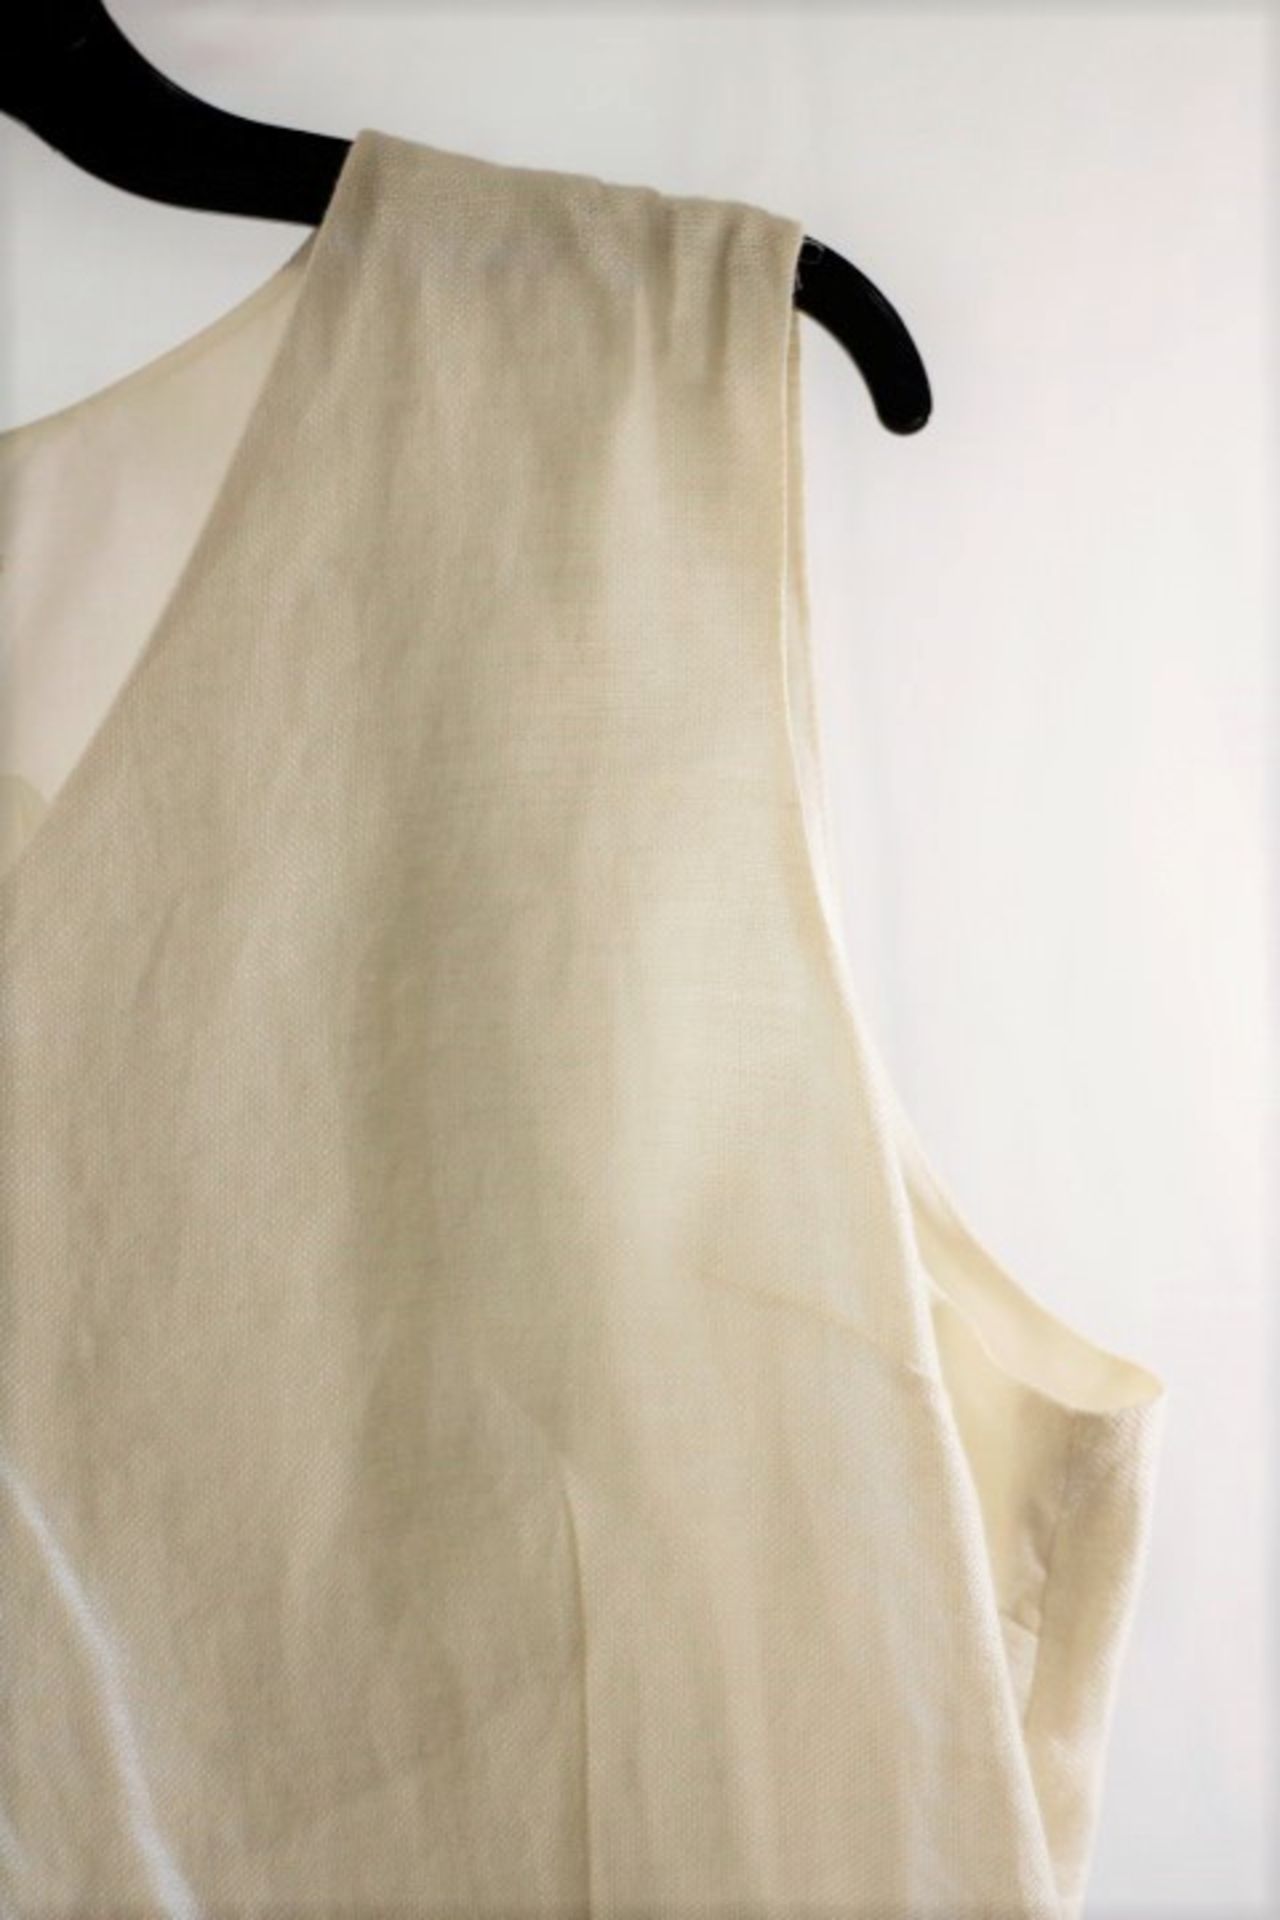 1 x Constantin Paris White Top - Size: 24 - Material: Acetate, Acrylic, Cotton, Fibre, Polyester, - Image 7 of 8